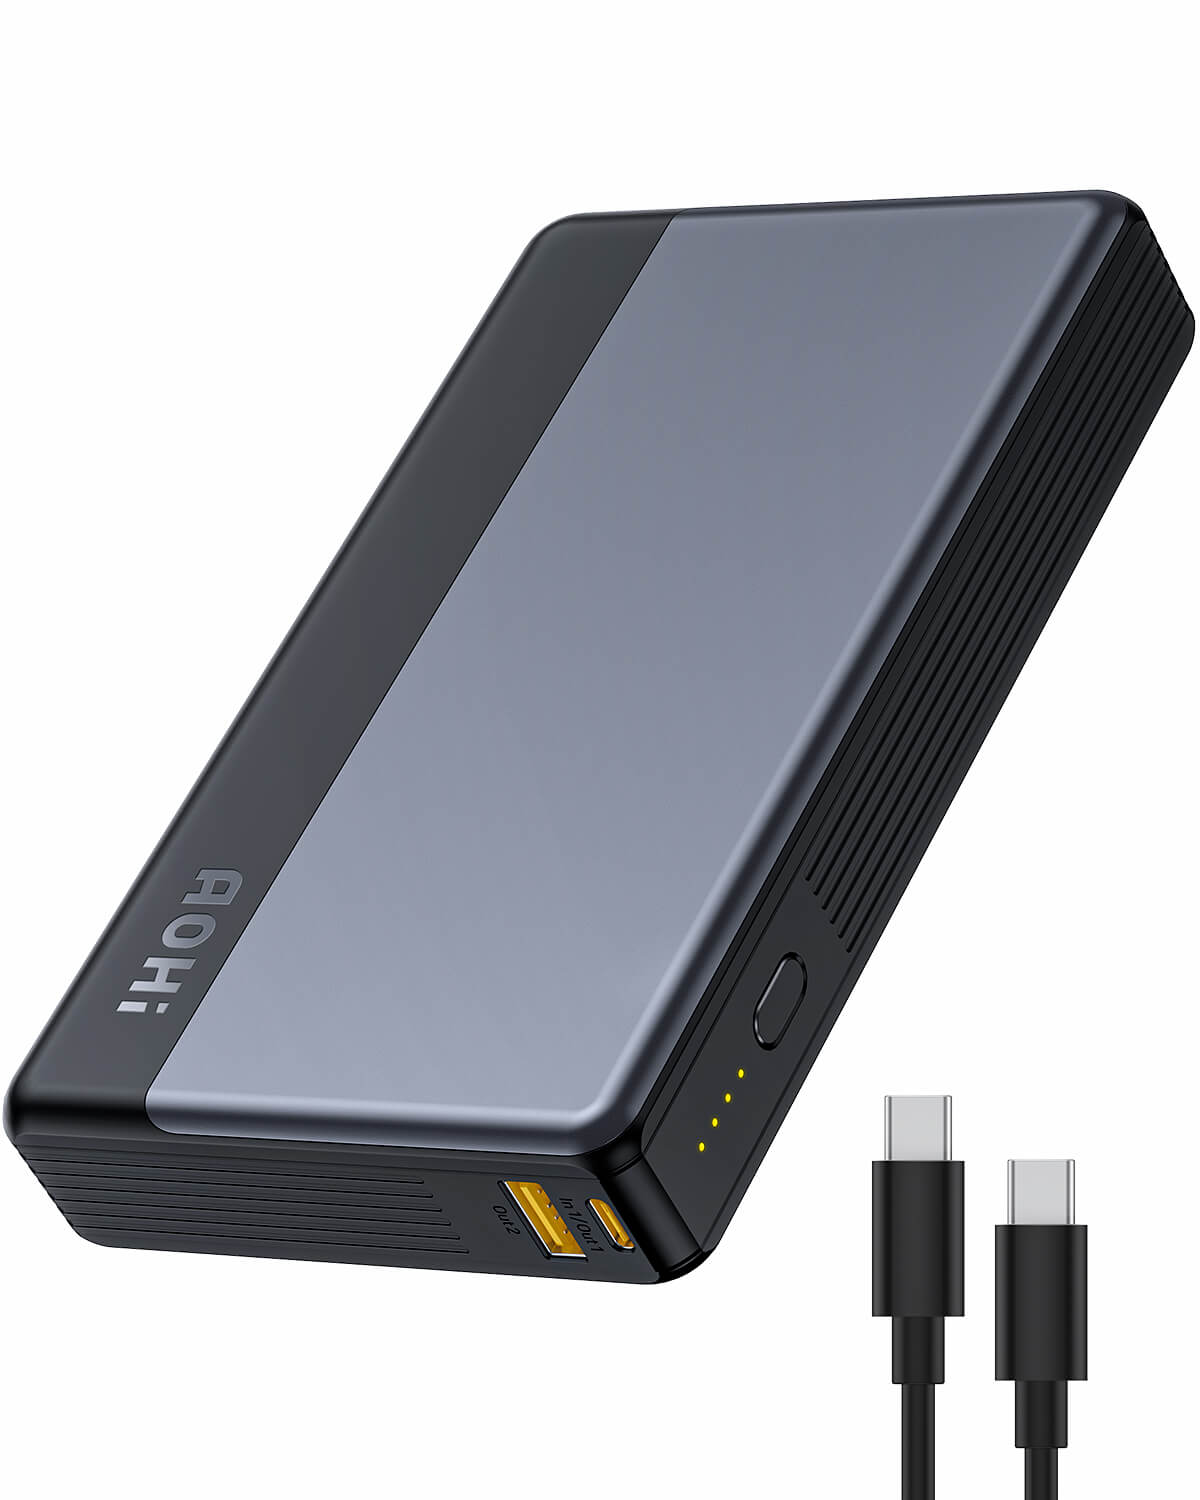 30,000mAh Portable Battery Power Pack, 65w Output USB-C, 18W Output USB-A